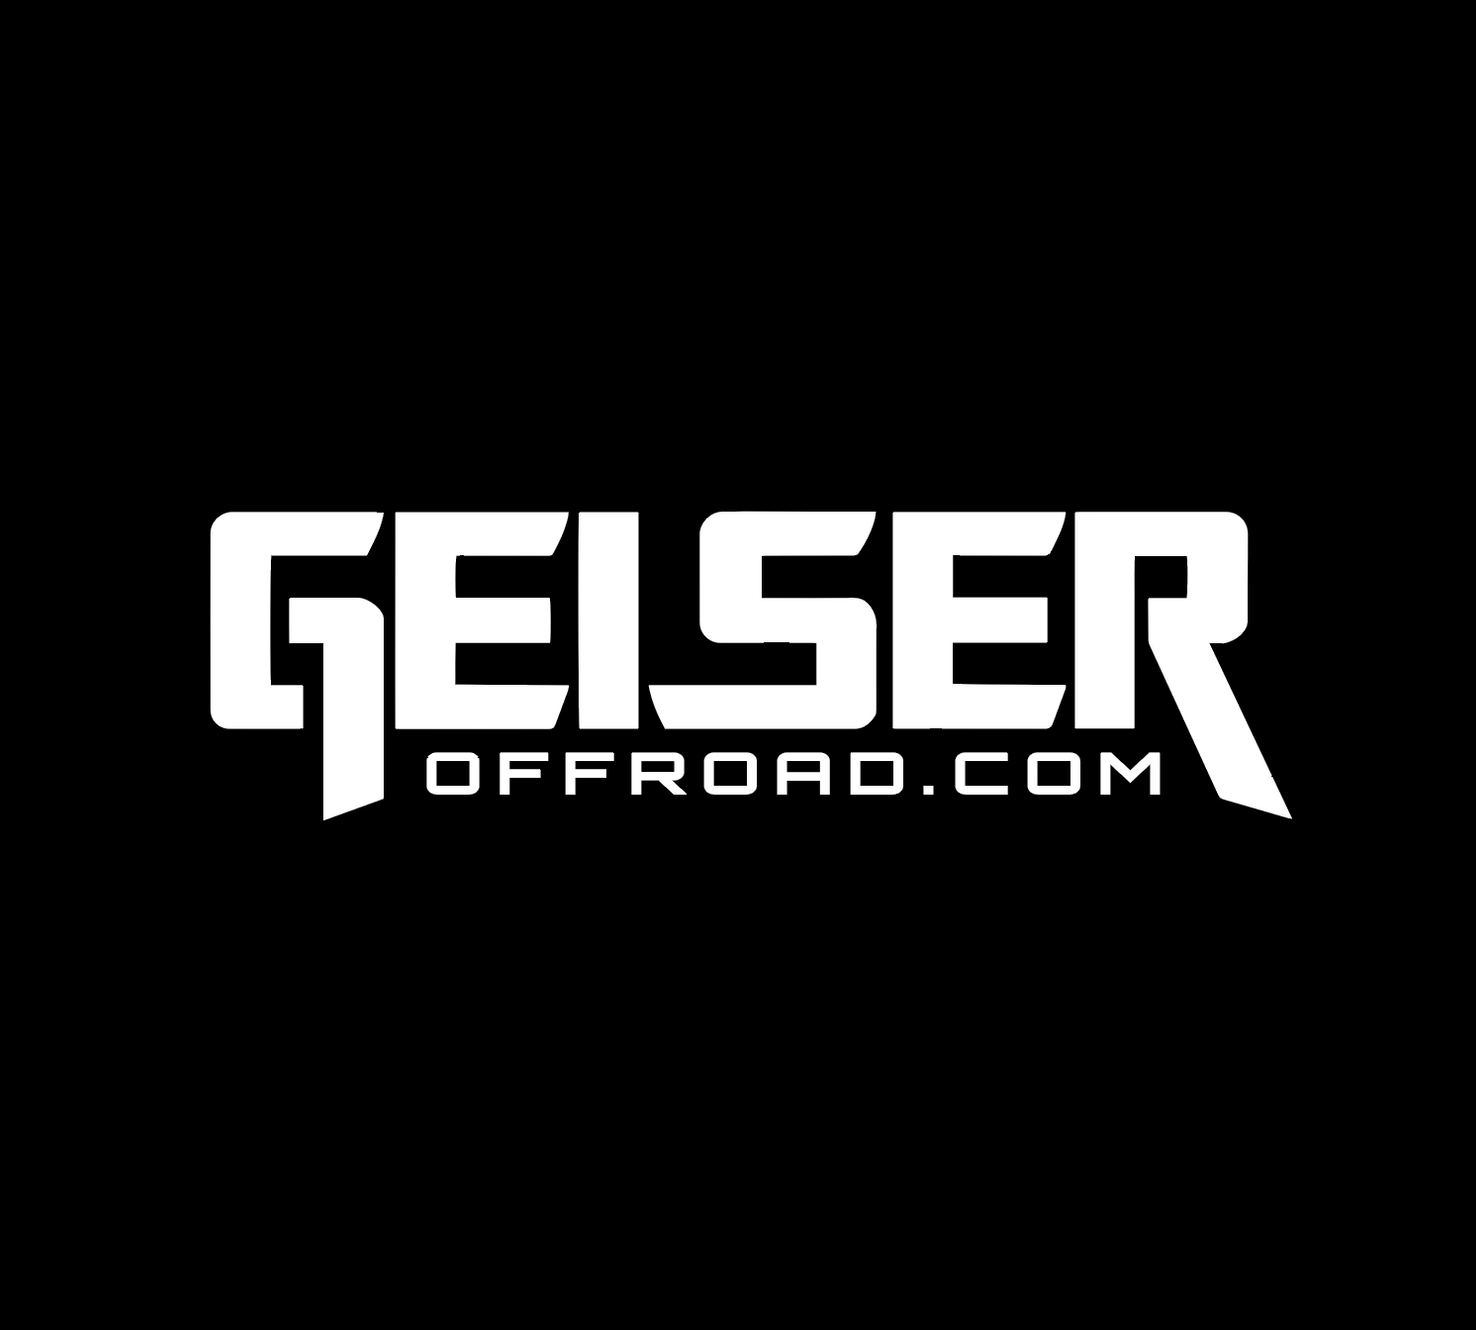 www.geiseroffroad.com